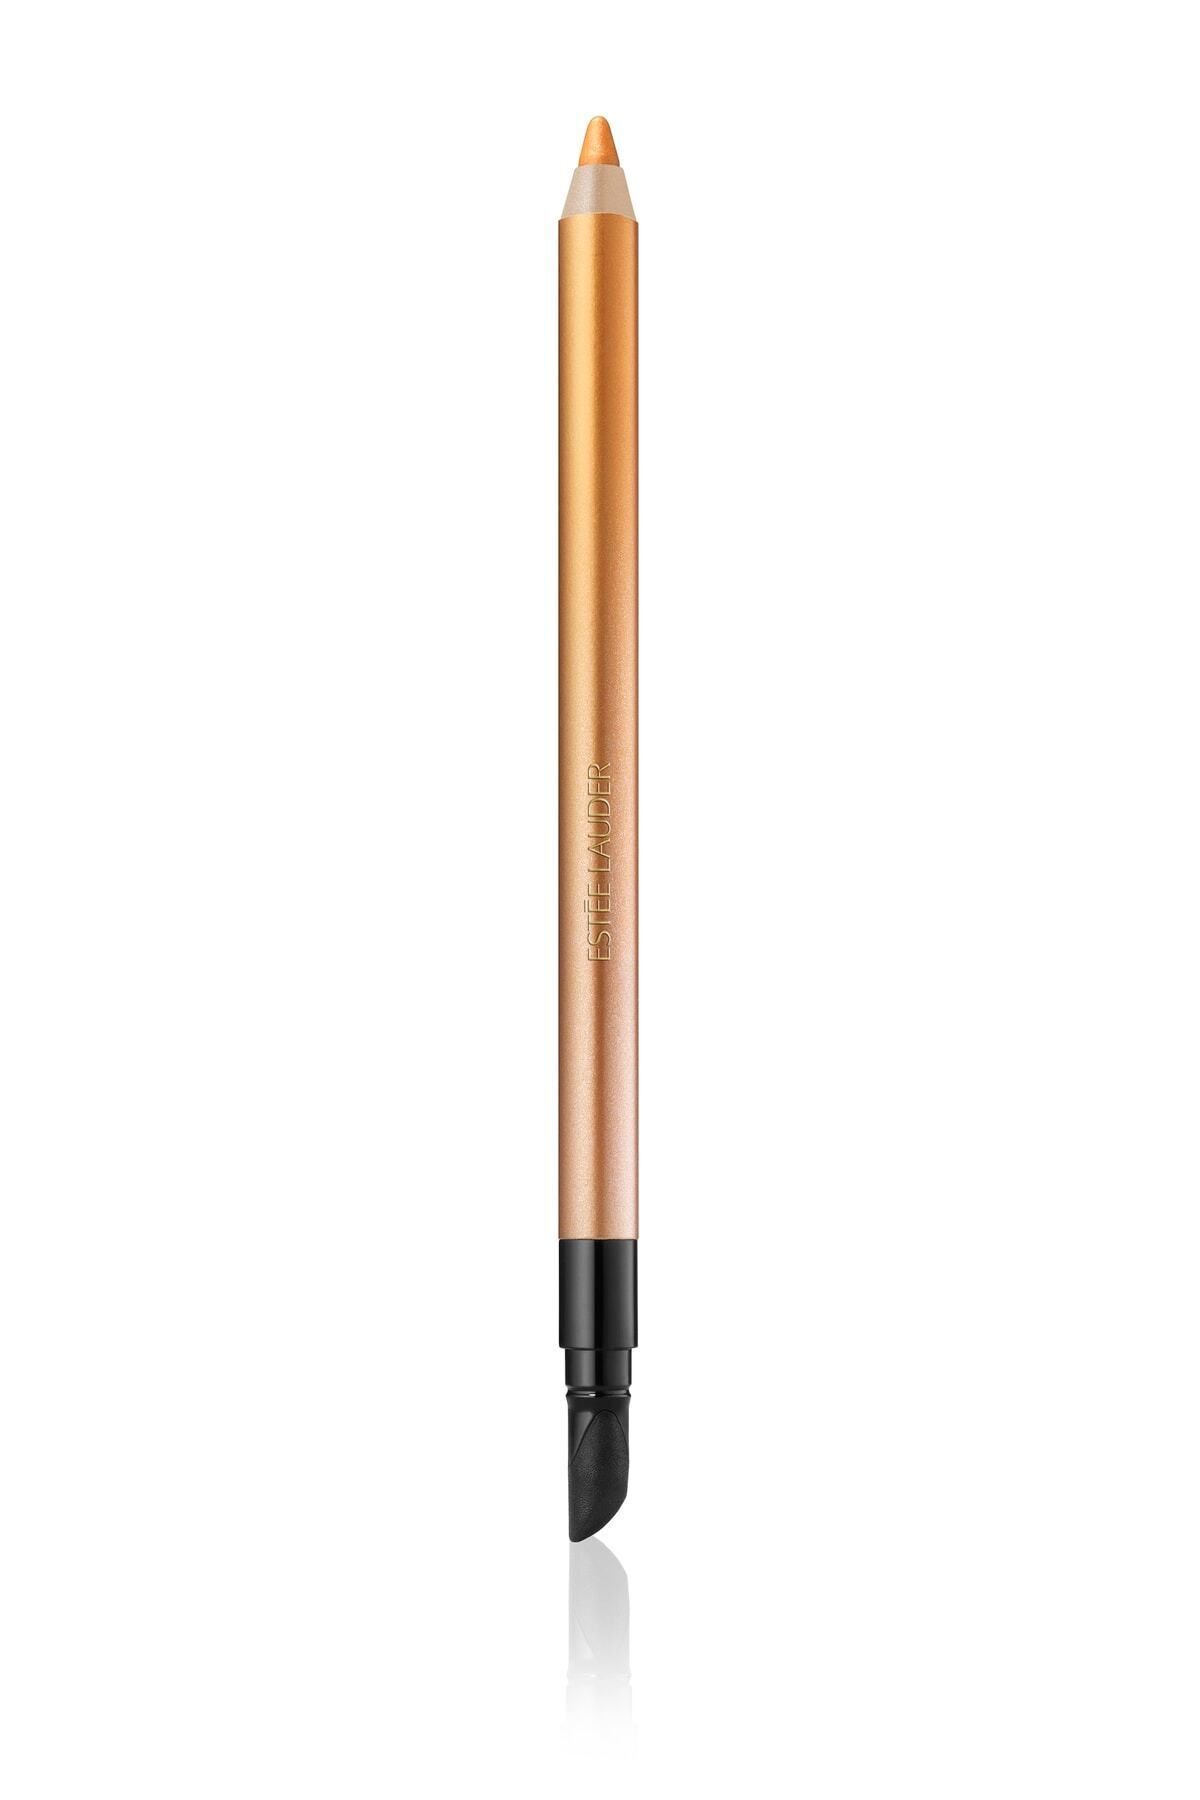 Estee Lauder قلم چشم مداد چشم دوباره پایدار ۲۴ ساعته ضد آب ژل رنگ: طلایی ۱۲ ۱.۲ گرم